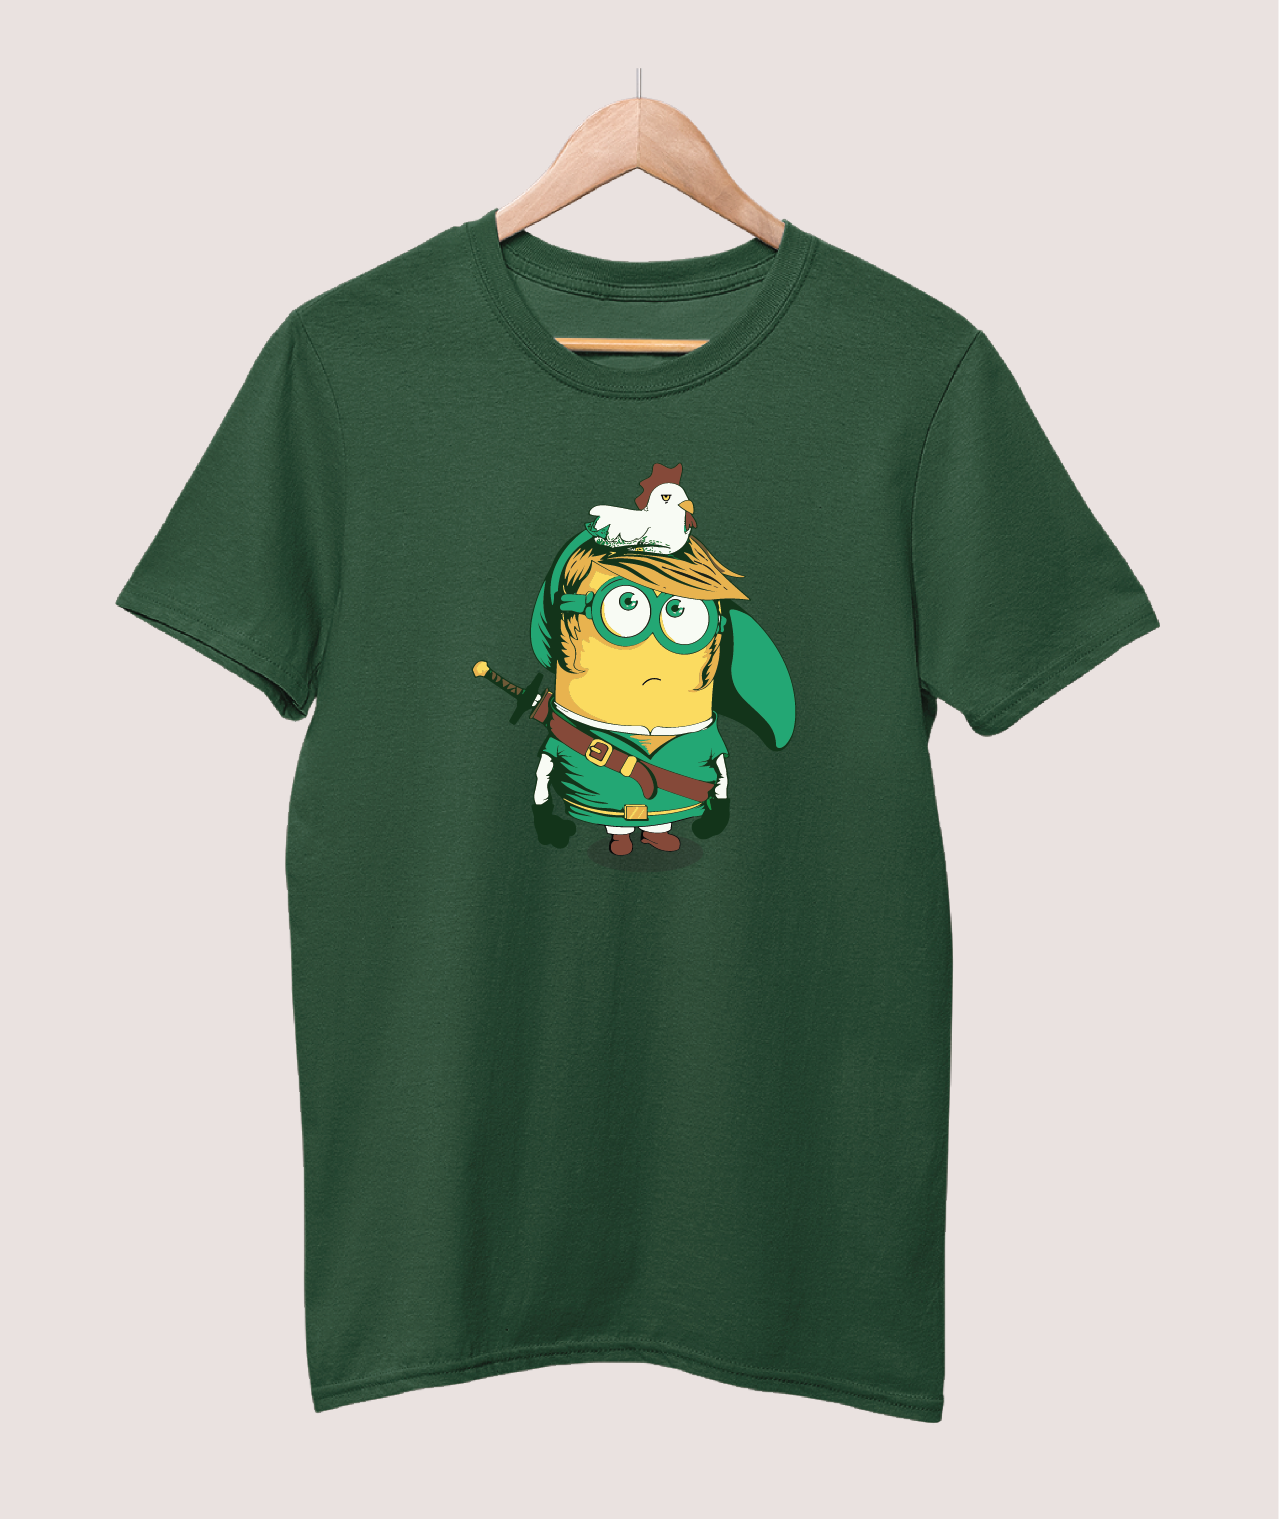 The legend of minion T-shirt